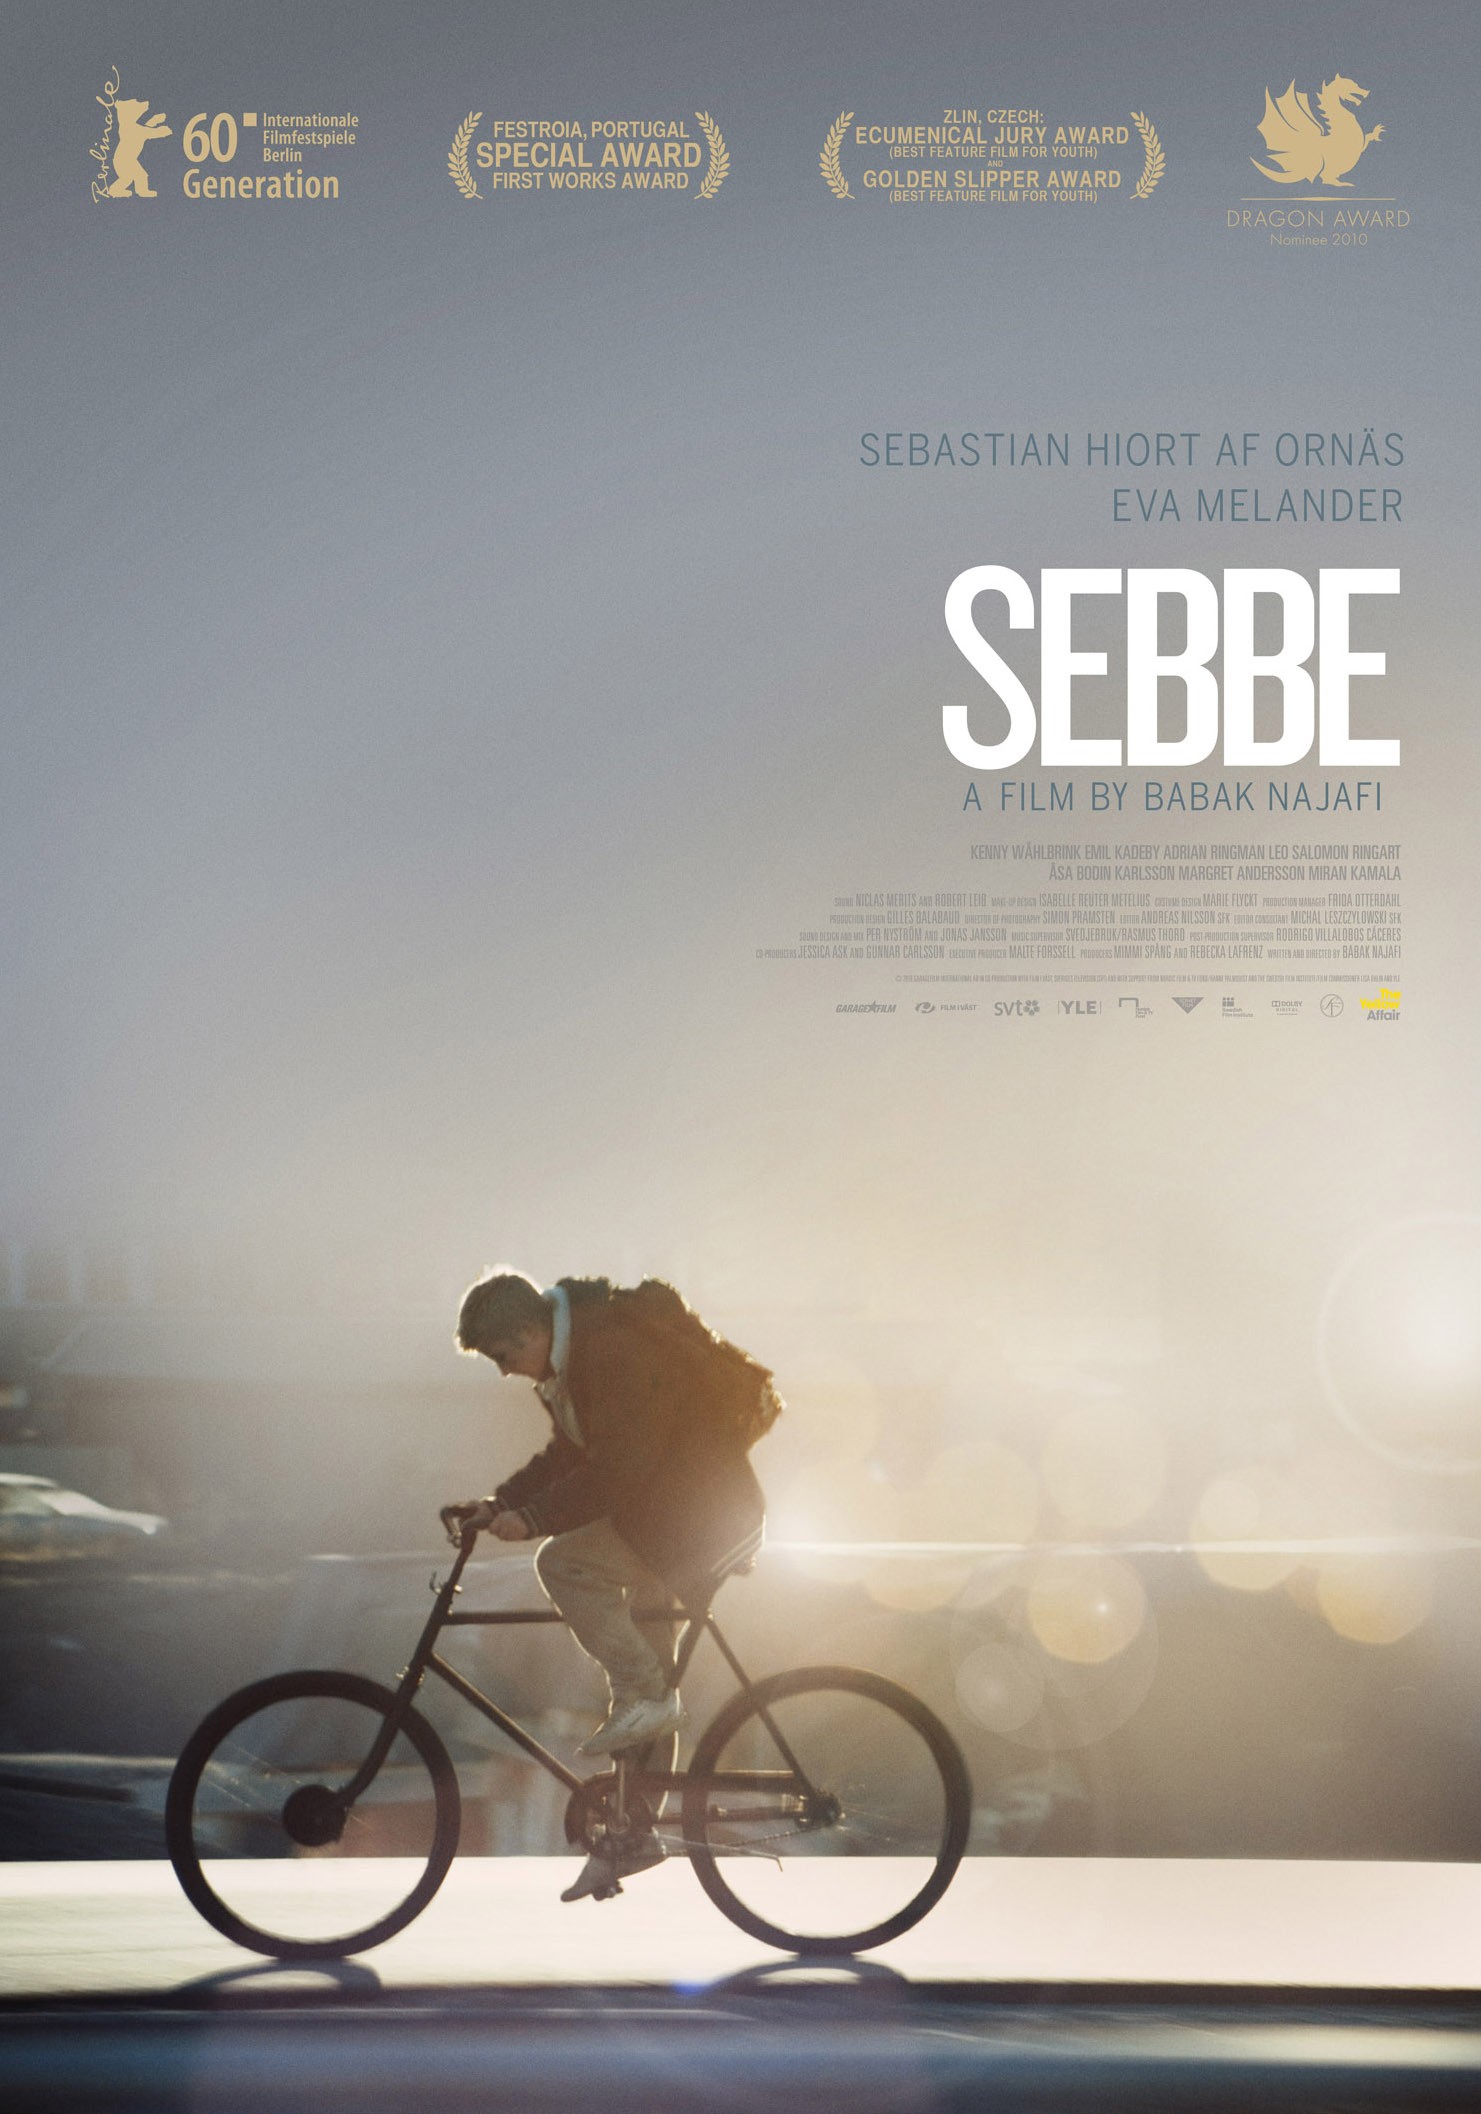 Mega Sized Movie Poster Image for Sebbe 